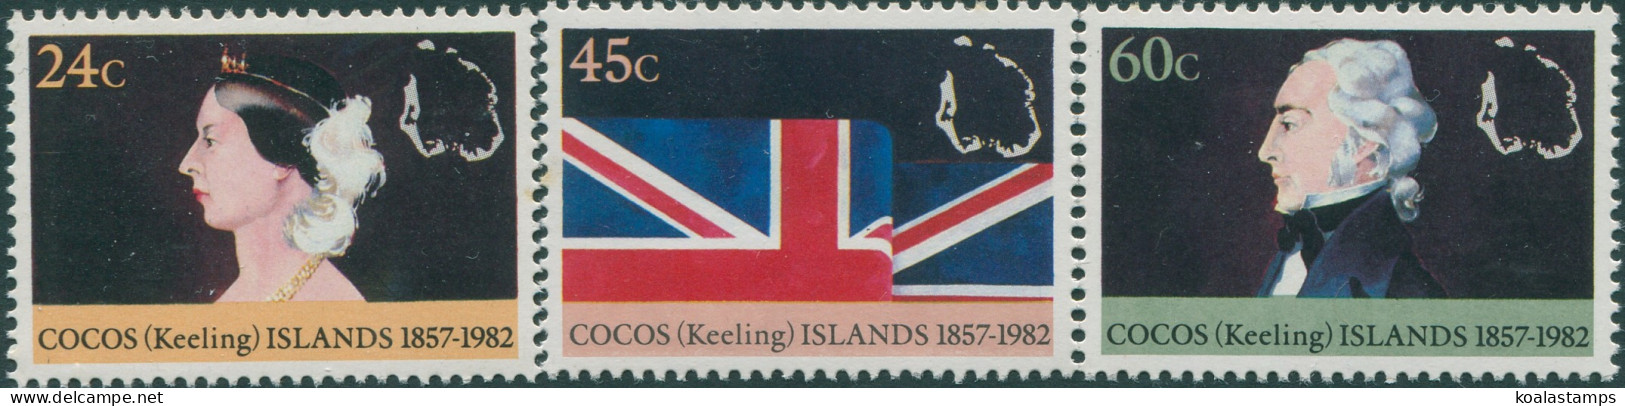 Cocos Islands 1982 SG79-81 125th Anniversary Set MNH - Kokosinseln (Keeling Islands)